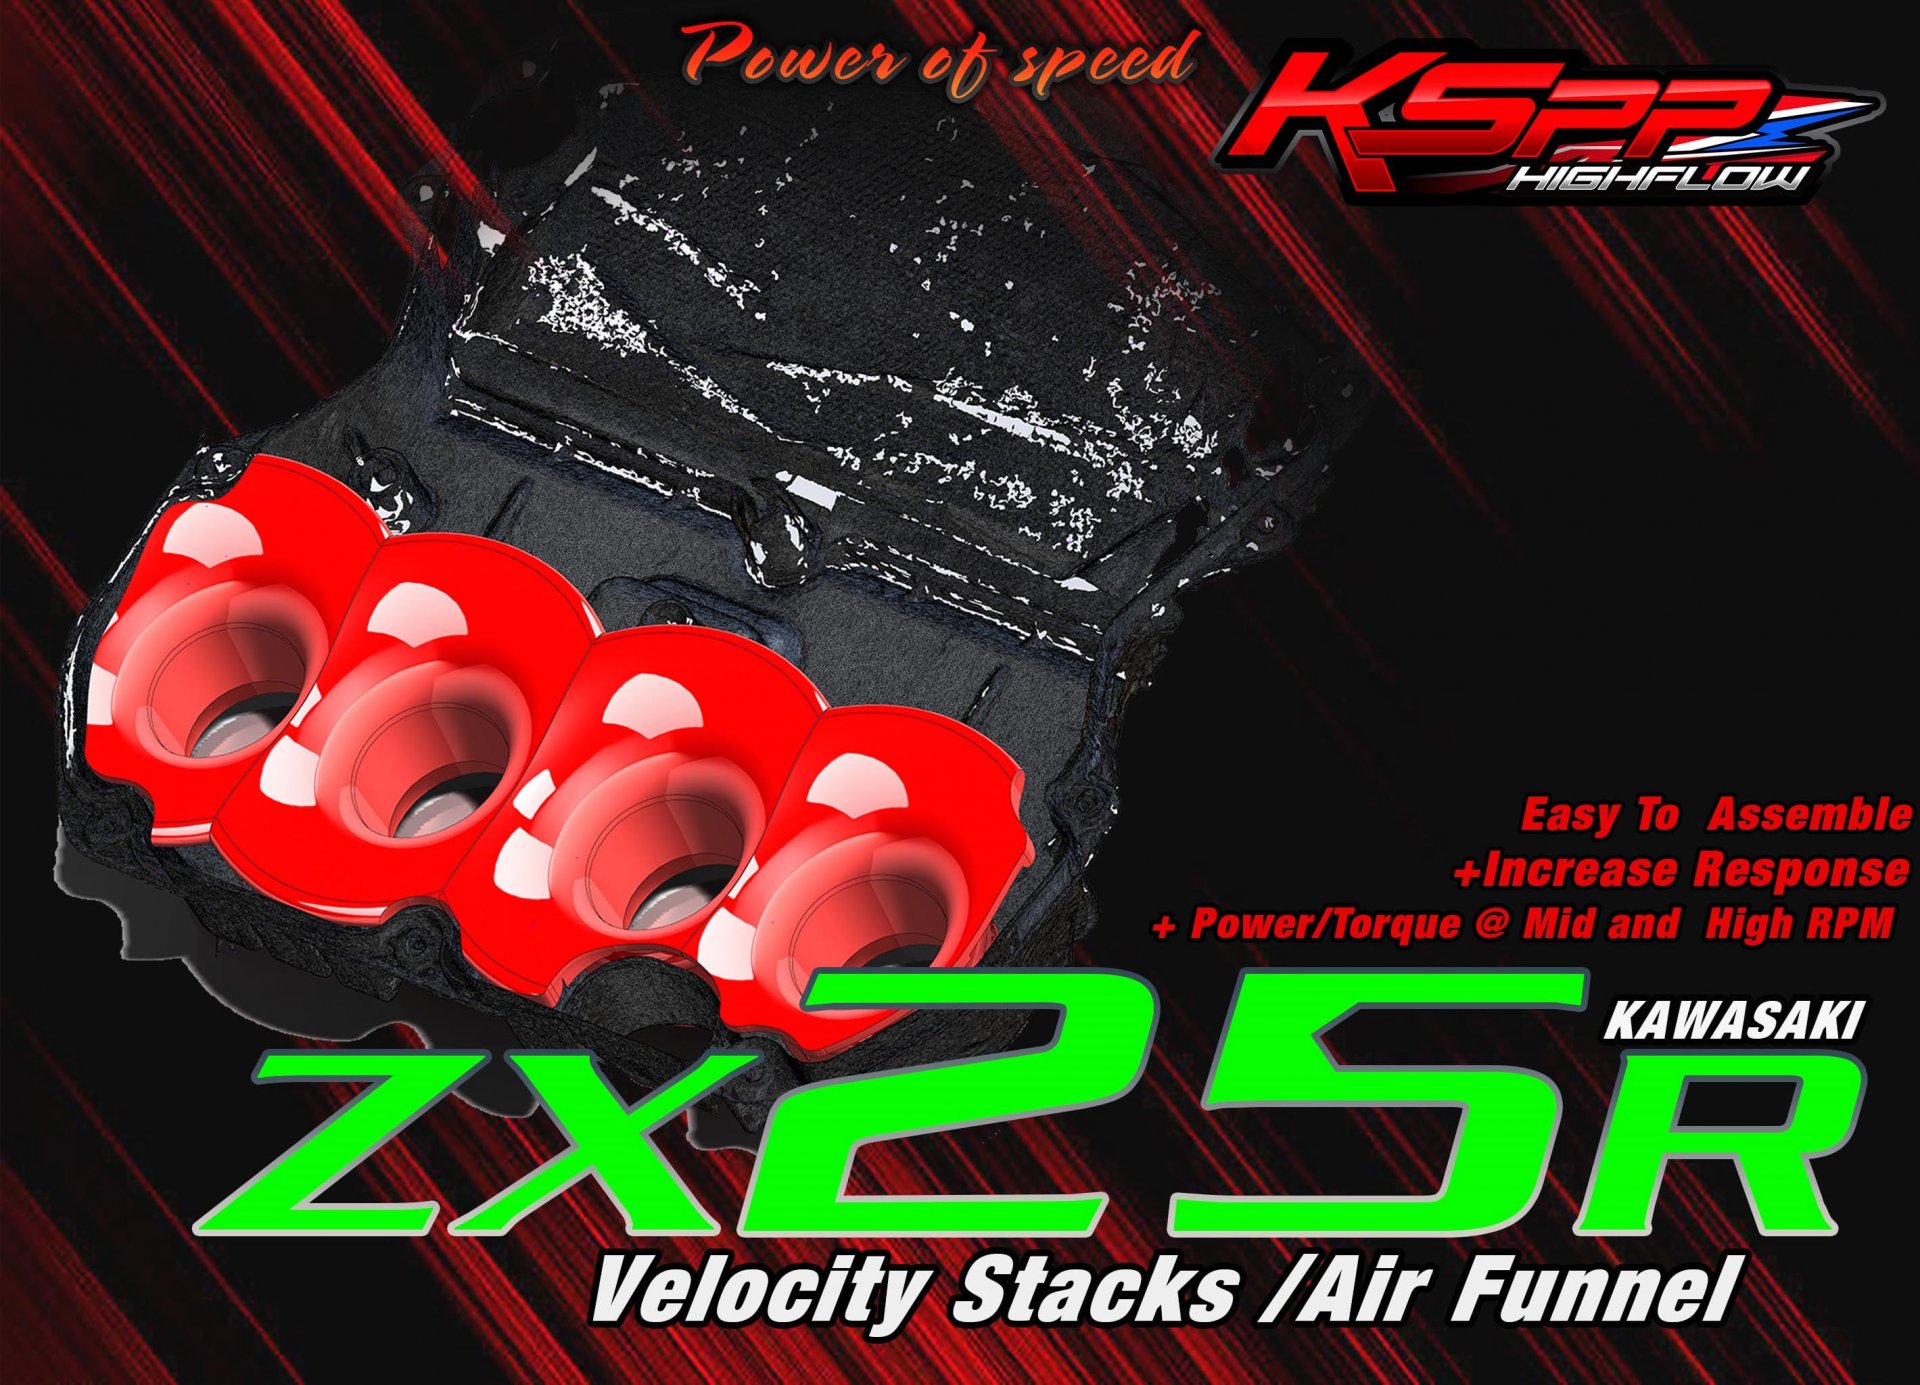 Zx25R ปากแตร /  Velocity stack -ปากแตรZx25R -Intake air pipeZx25R-Velocity stackZx25R - AirFunnel Zx25R  [Kawasaki]